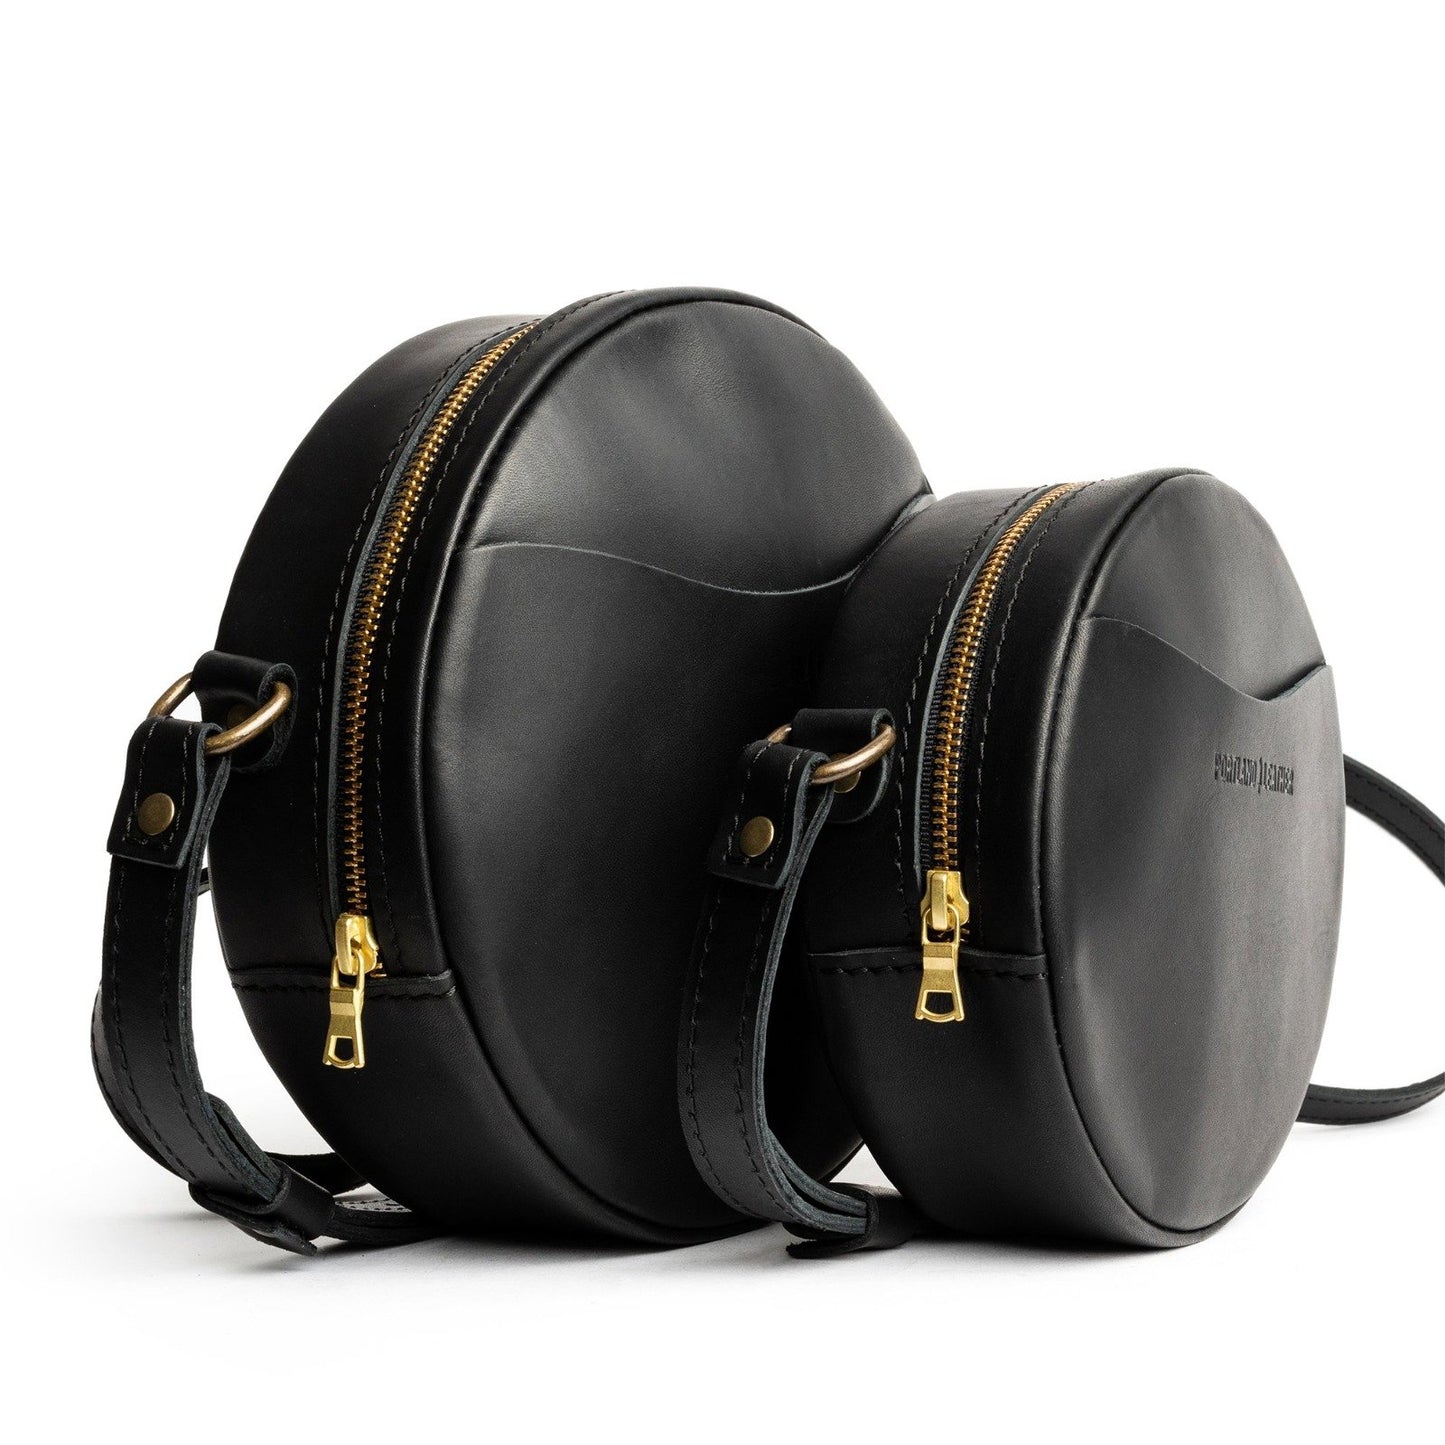 All Color: Black | handmade leather purse circle bag